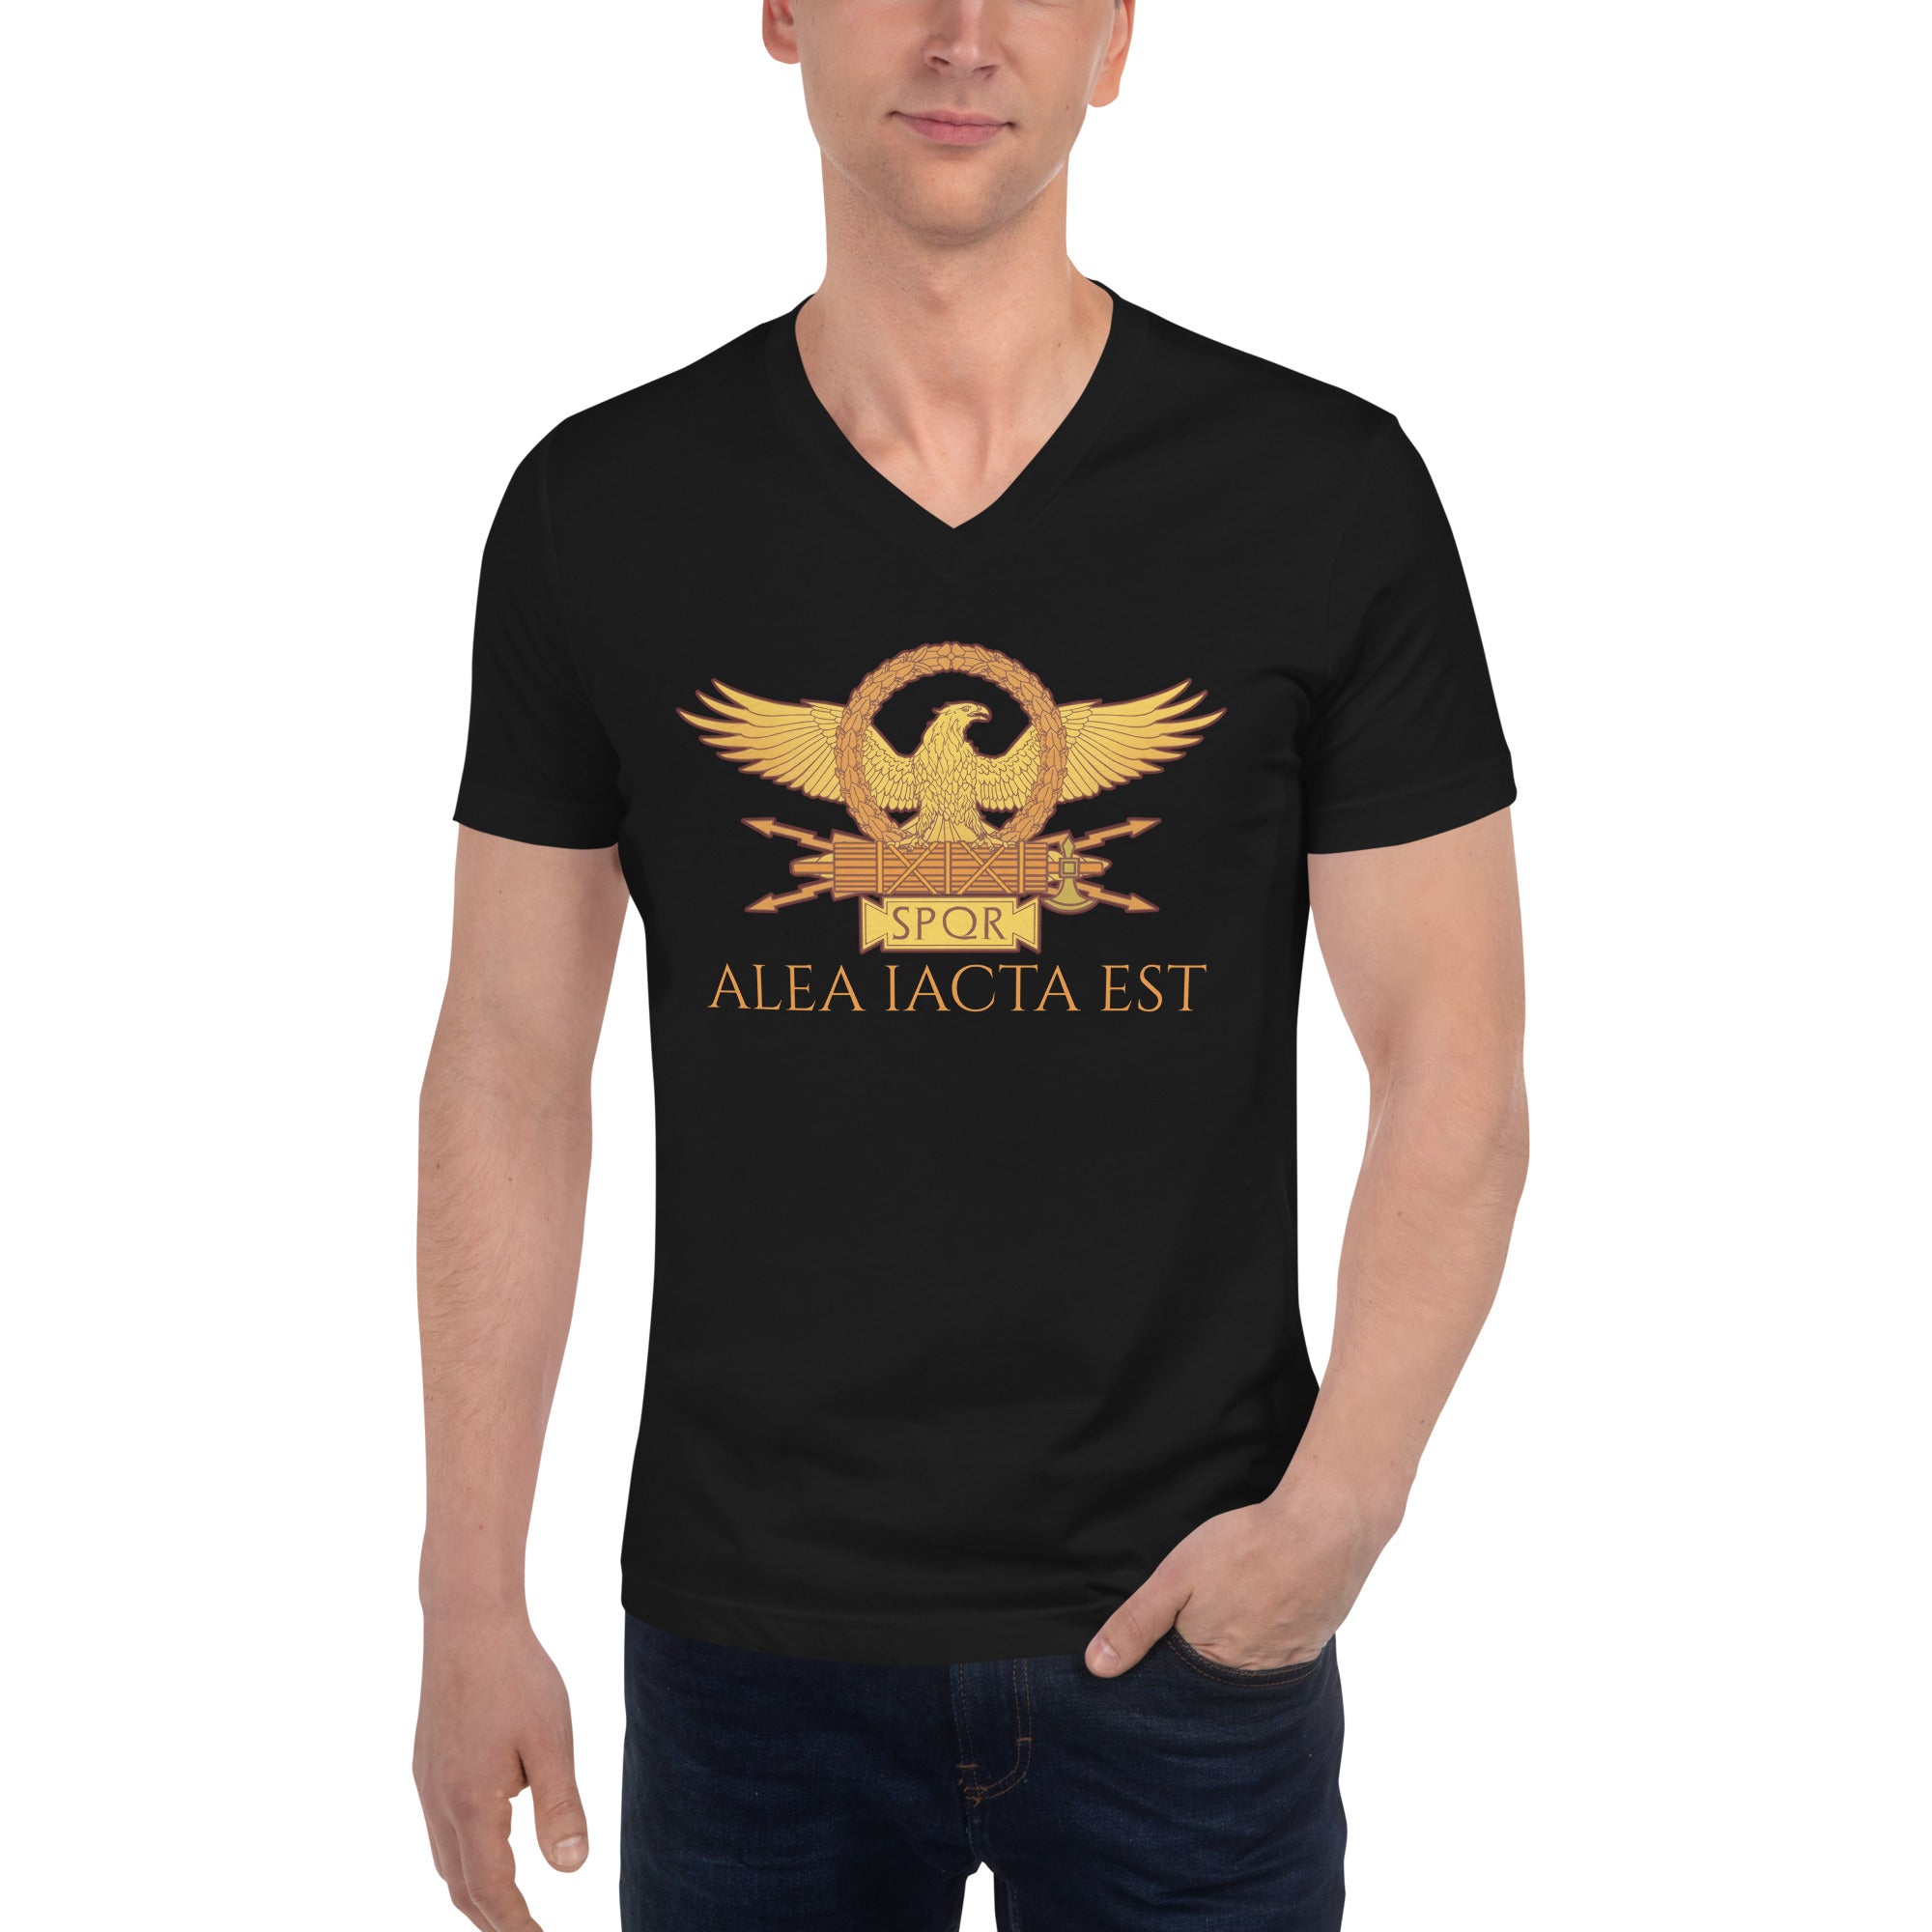 Alea Iacta Est - Julius Caesar - Ancient Rome - Unisex Short Sleeve V-Neck T-Shirt